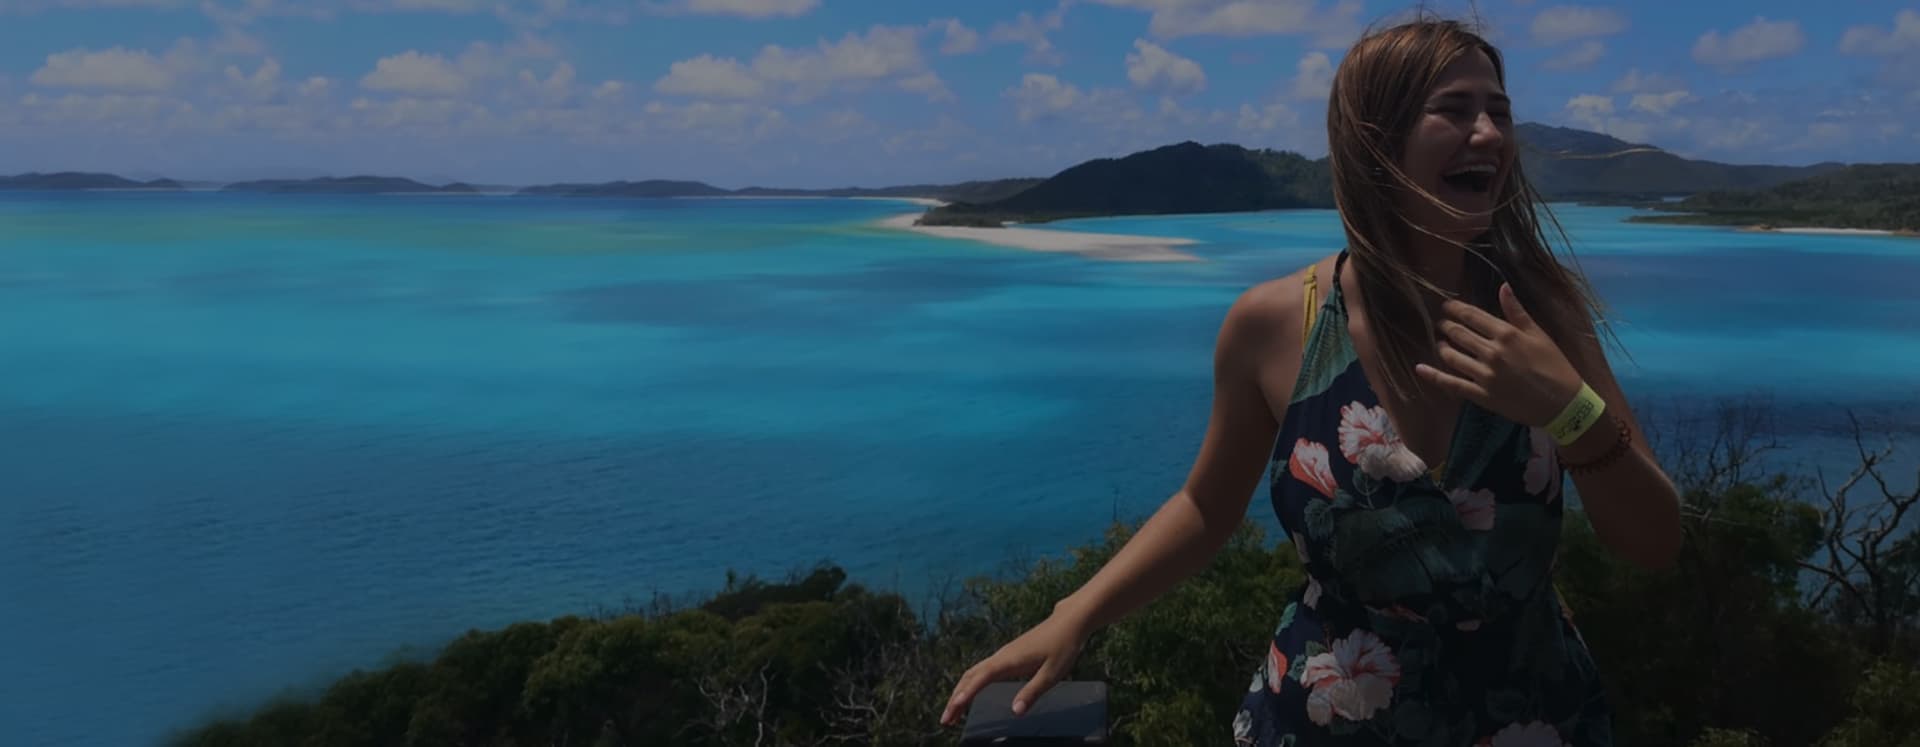 Estudicar curso en Australia islas Whitsundays